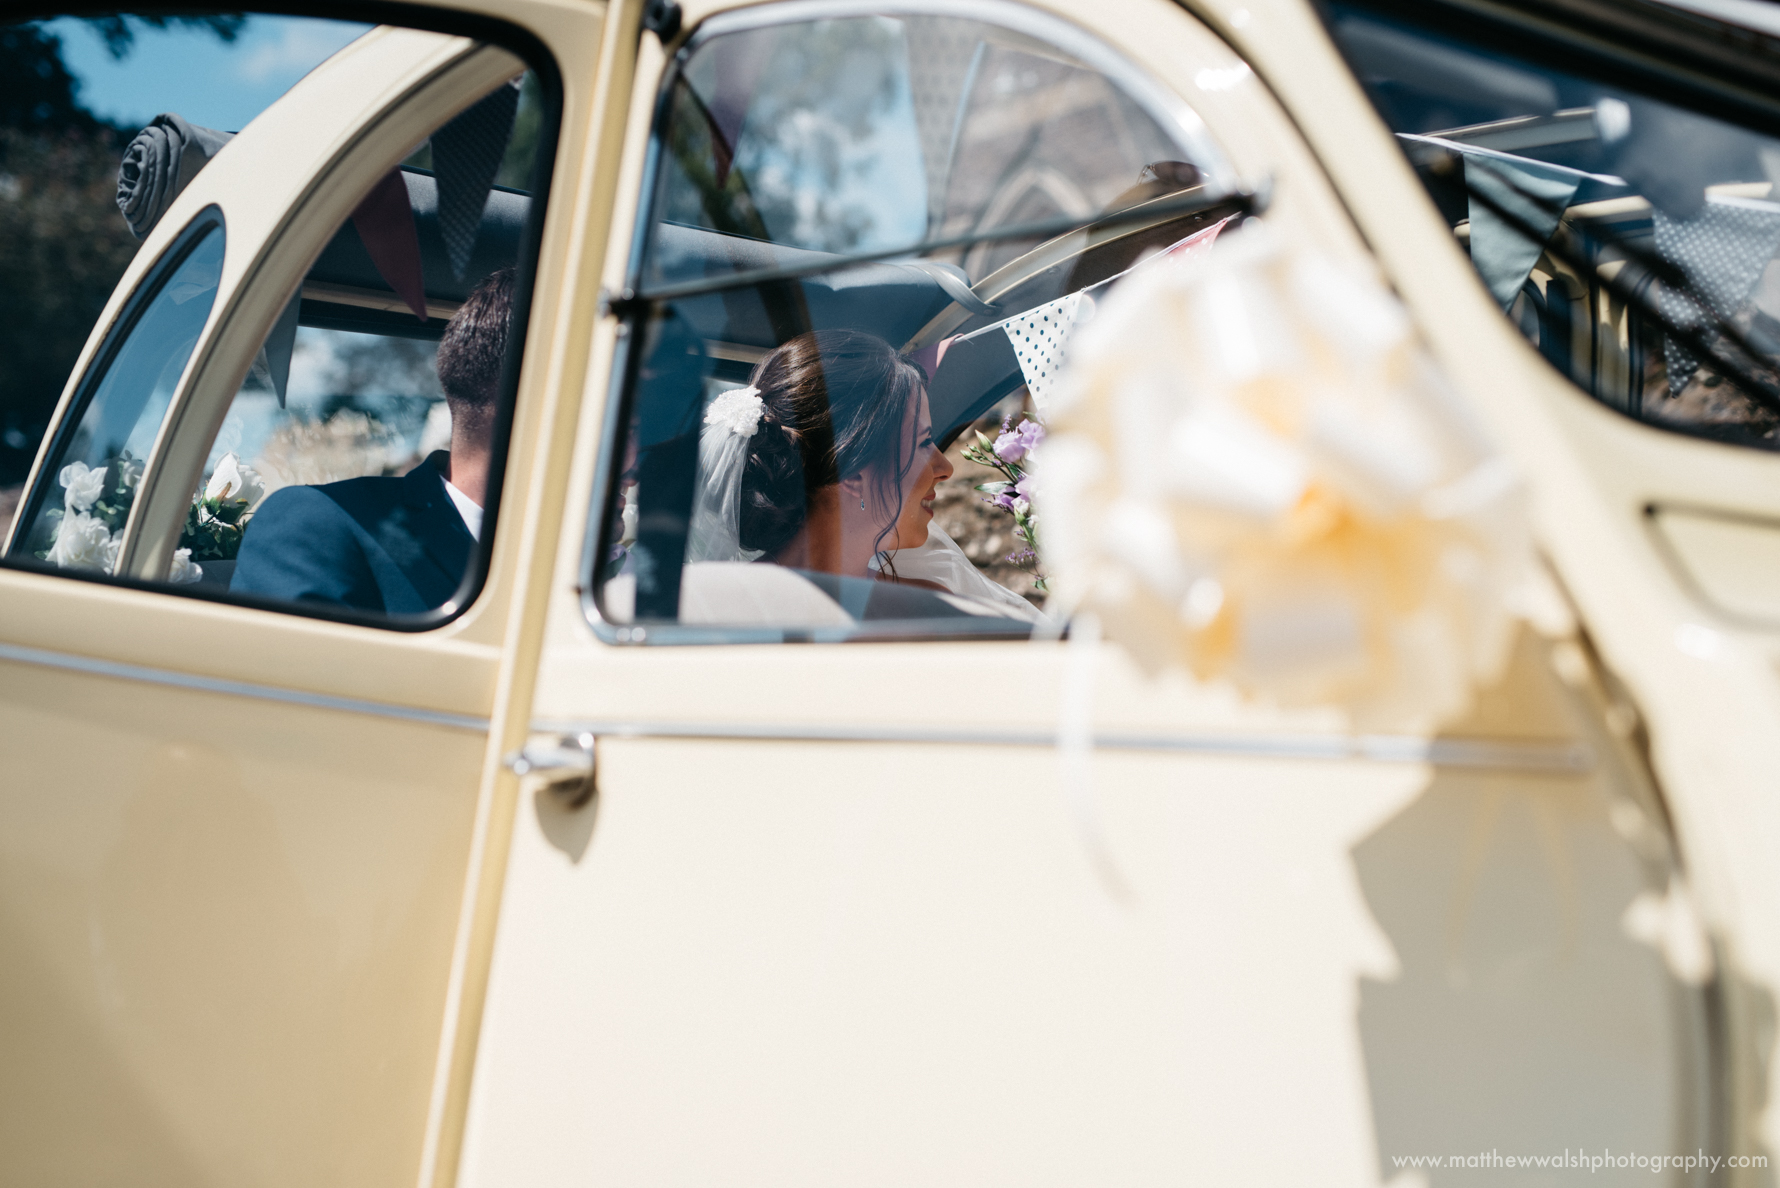 The bride arrives in the 2cv wedding car